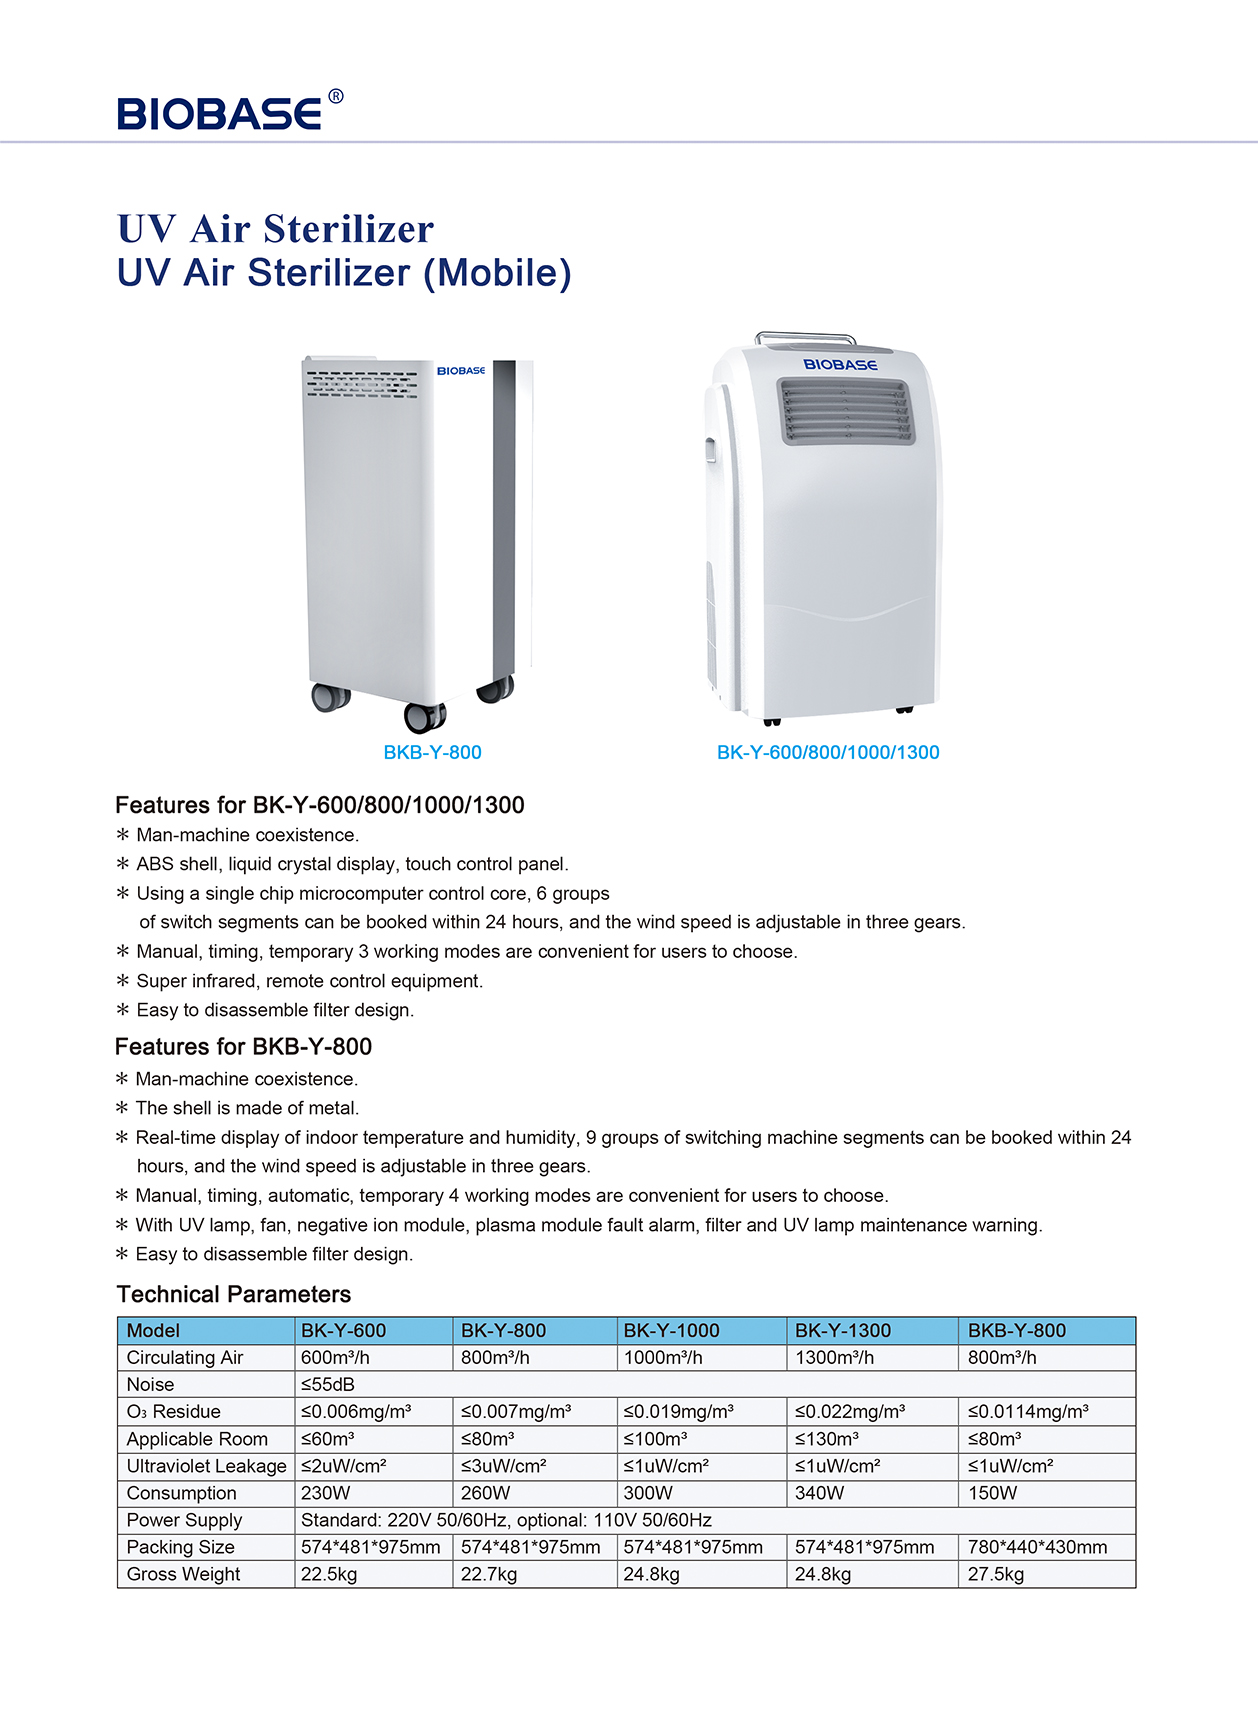 UV Air Sterilizer (Mobile)